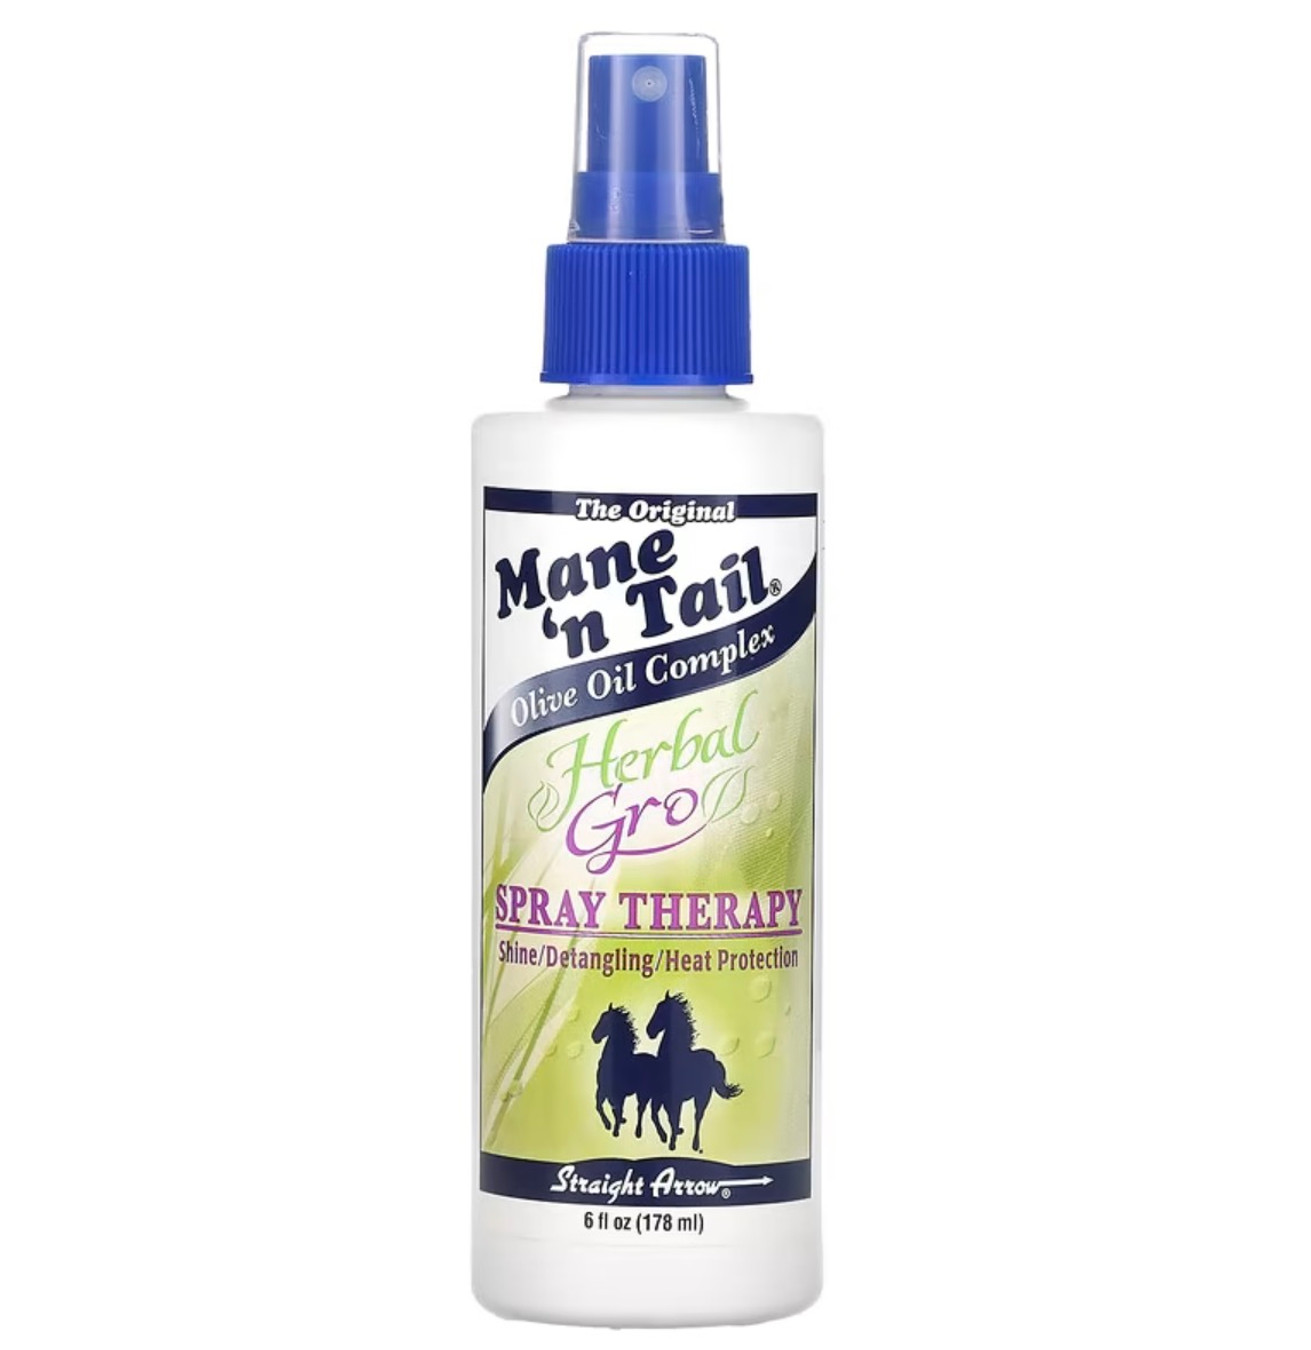 MANE 'N TAIL Herbal Gro Spray Therapy (6 oz)